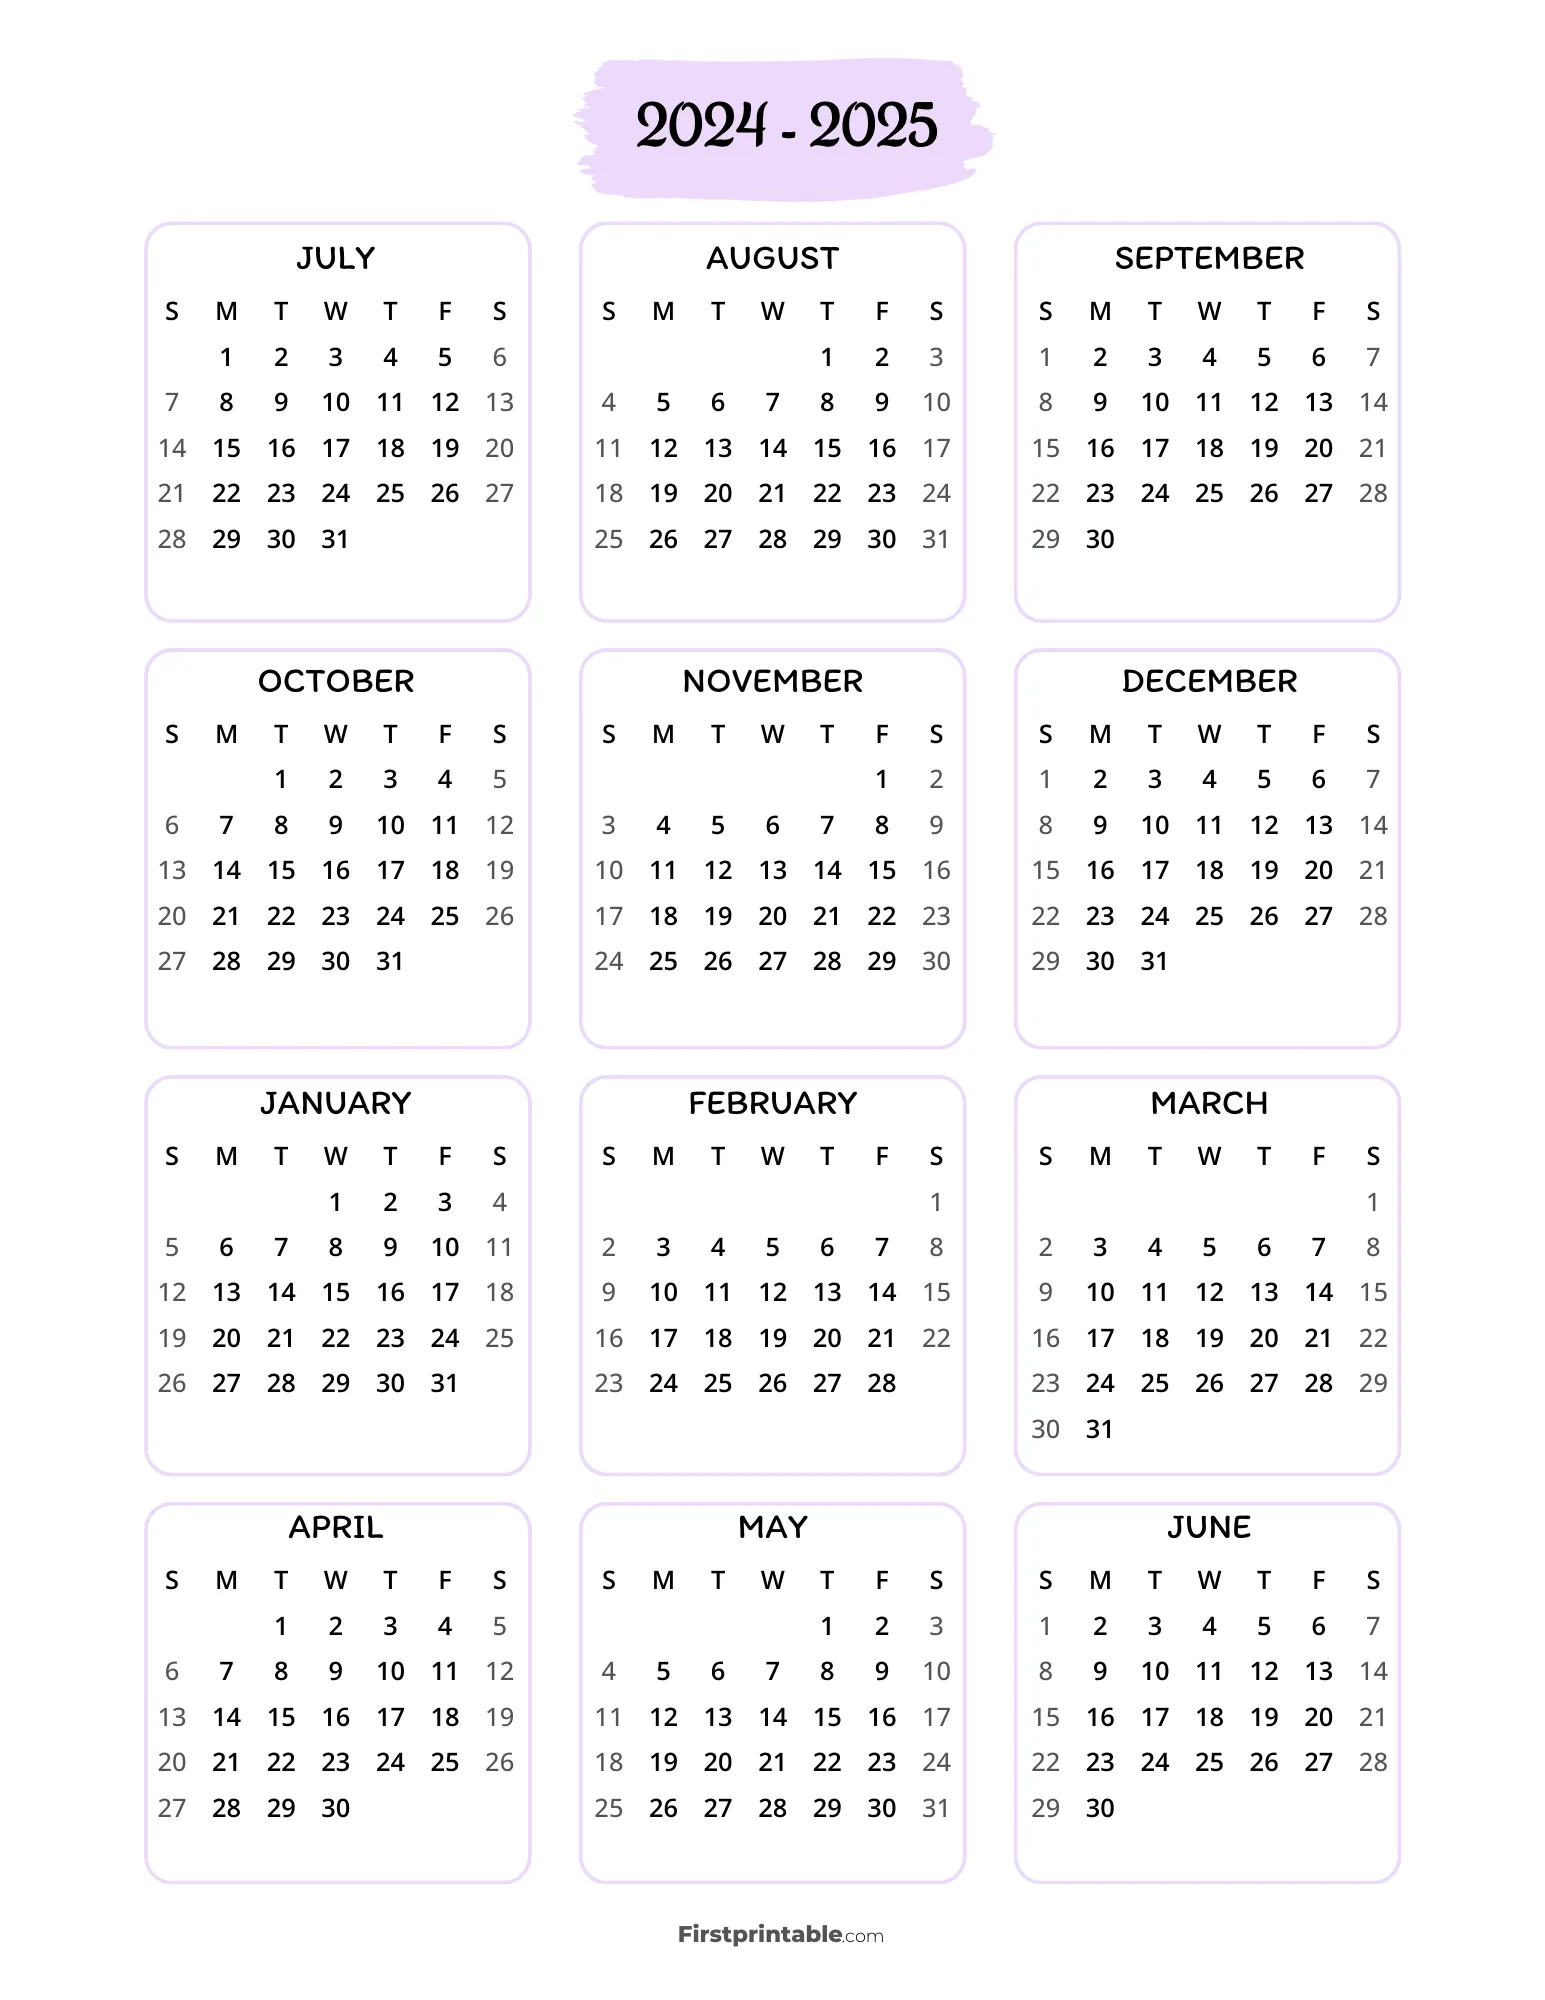 Yearly School Calendar Template 02